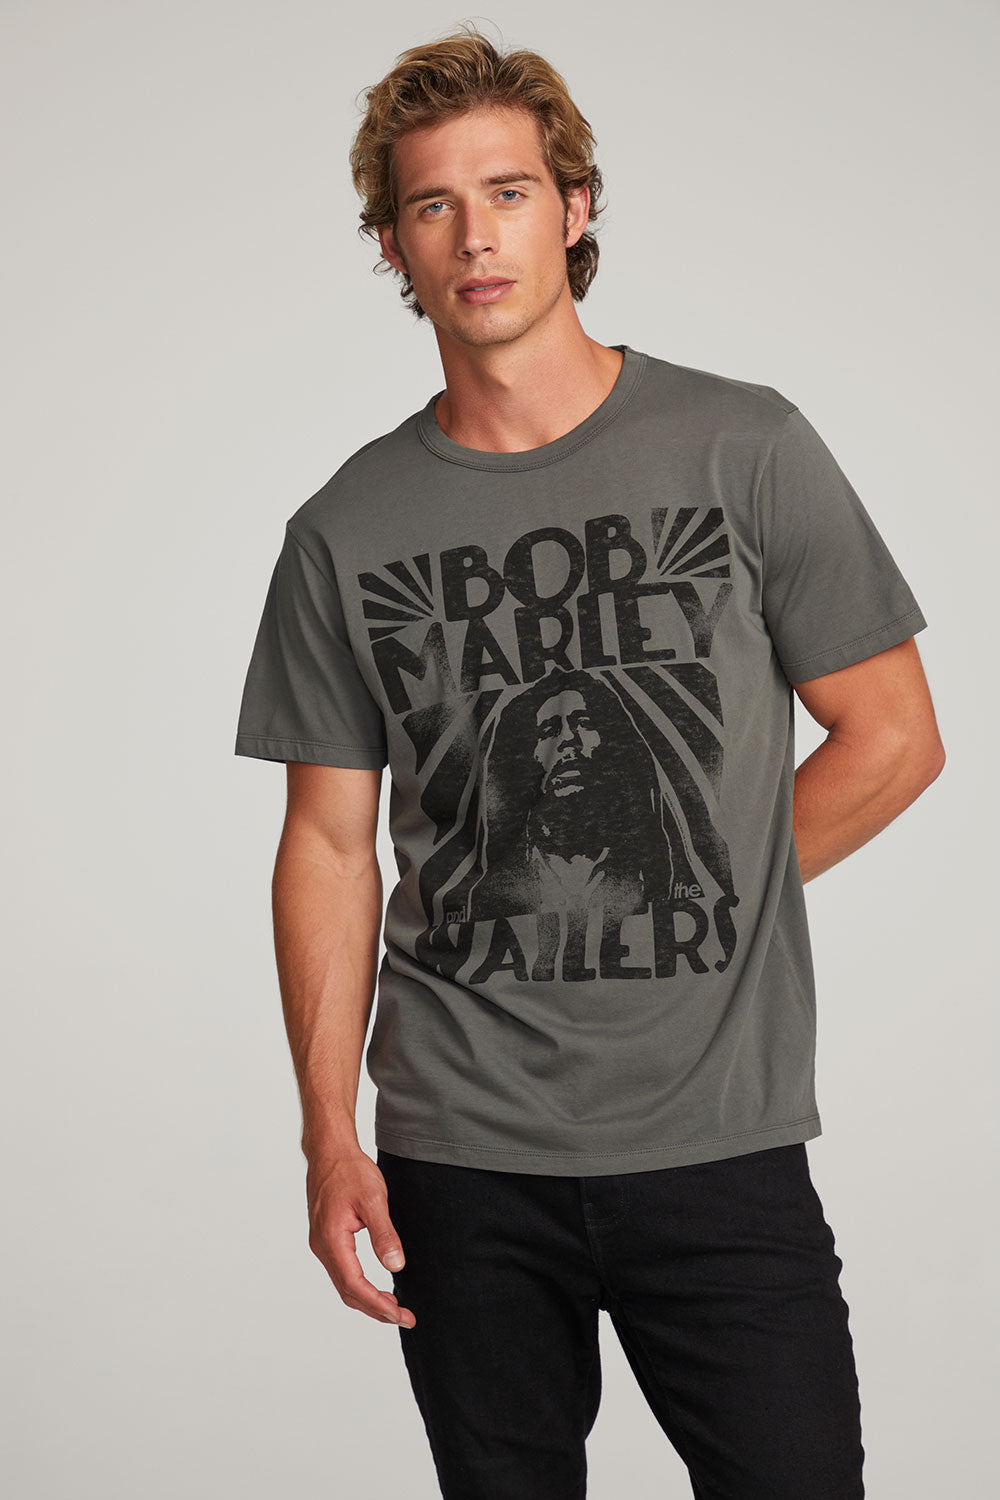 Bob Marley And The Wailers Mens Tee MENS chaserbrand